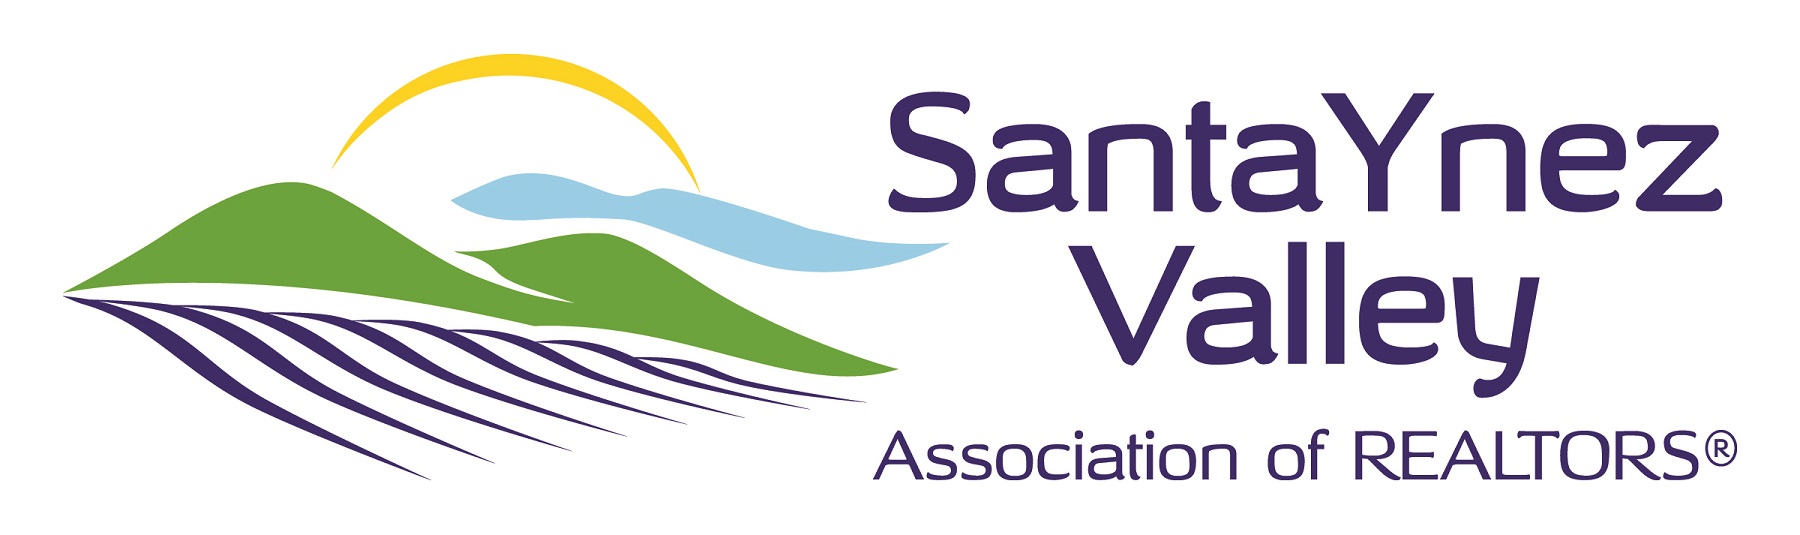 Santa Ynez Valley Association of REALTORS